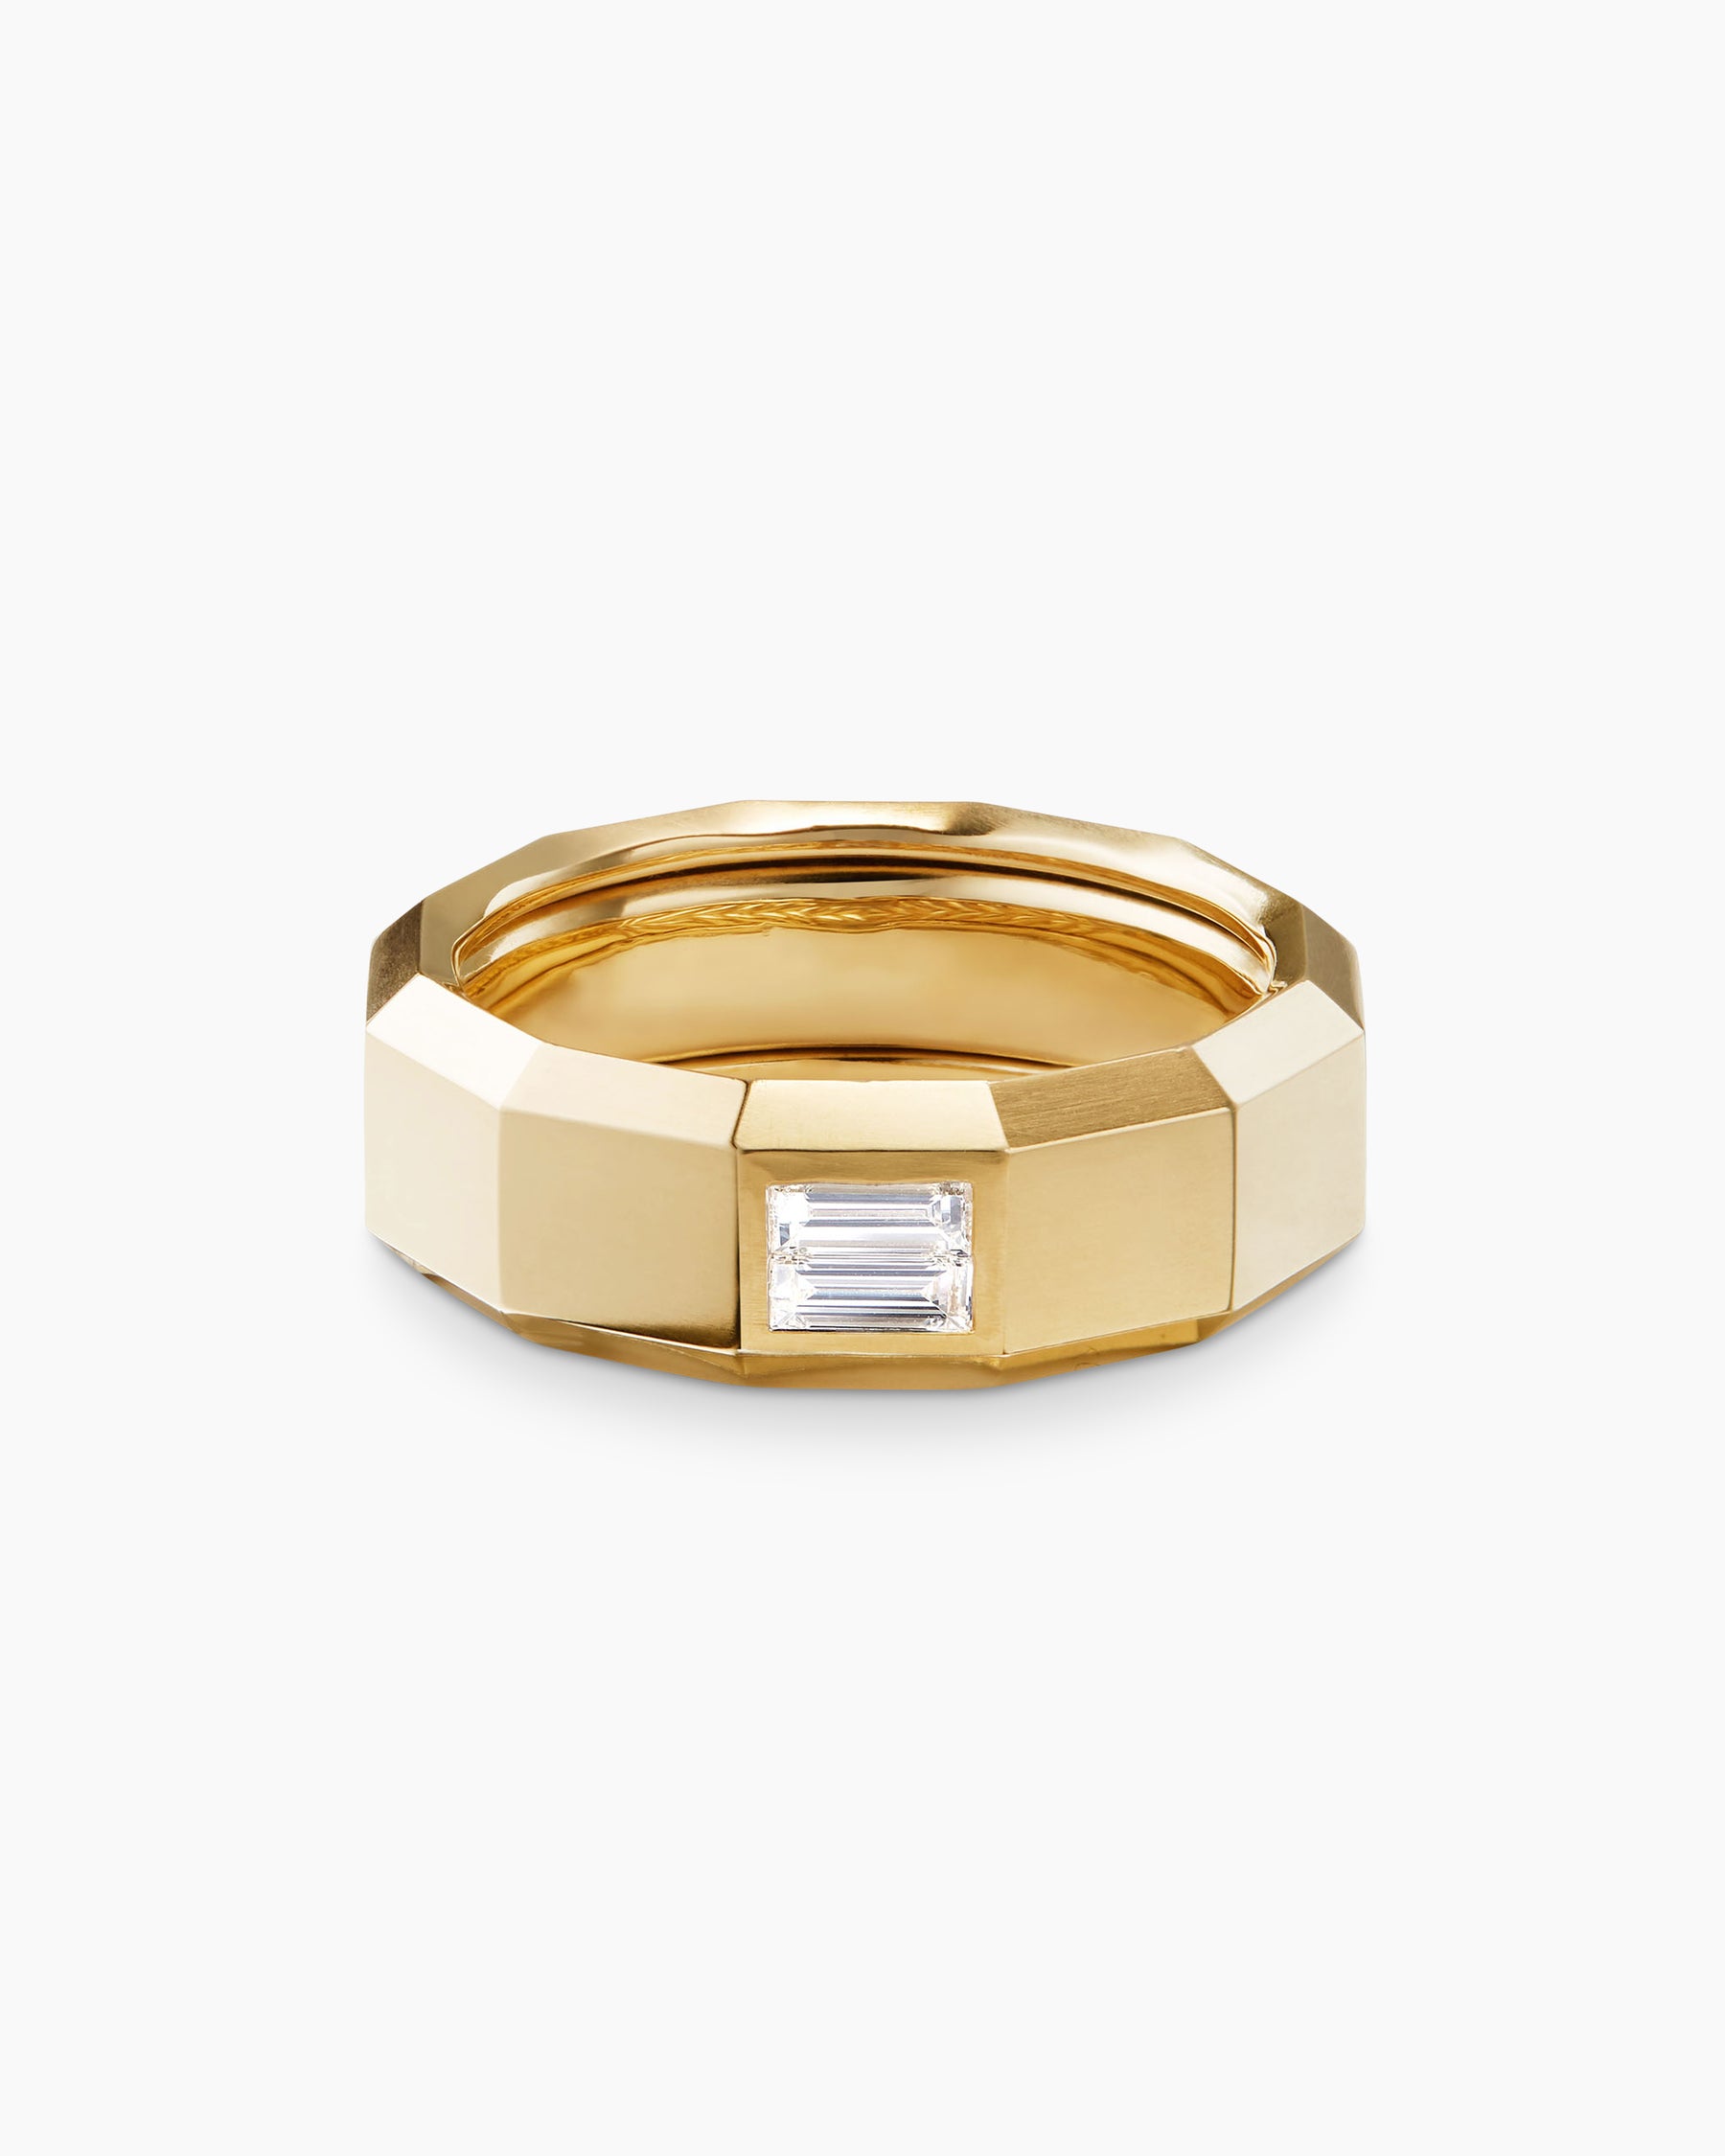 Men/Women David Yurman 18k Yellow Gold Diamond Pave Ring Size 11 Extremely  Rare